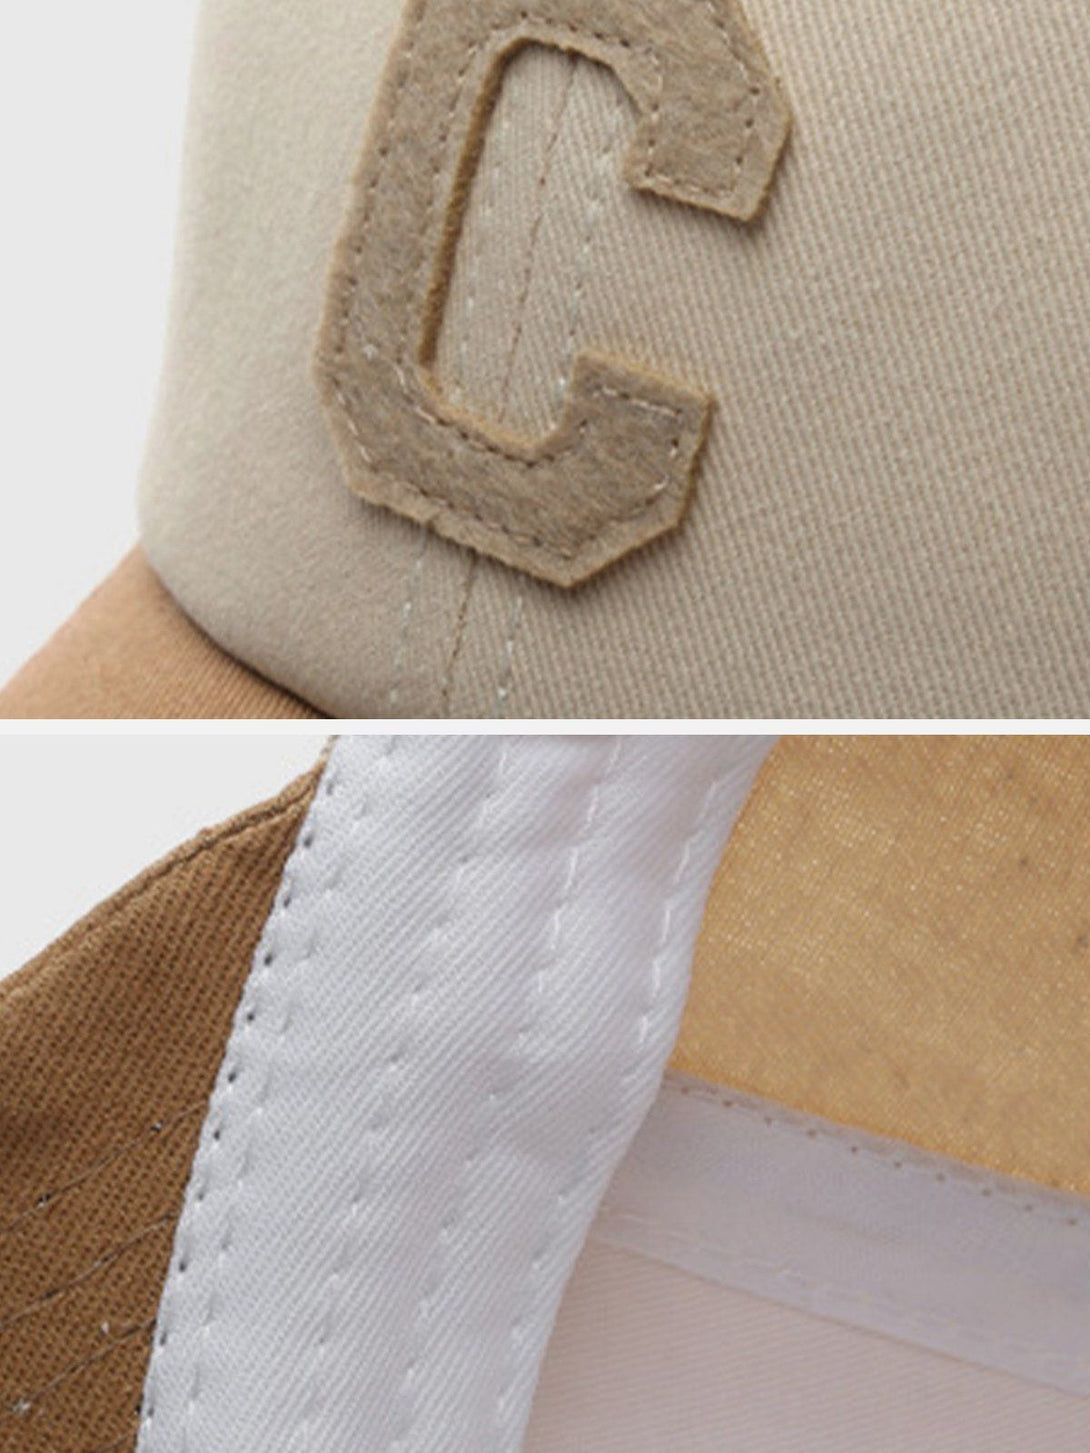 Majesda® - Letter "C" Baseball Cap- Outfit Ideas - Streetwear Fashion - majesda.com